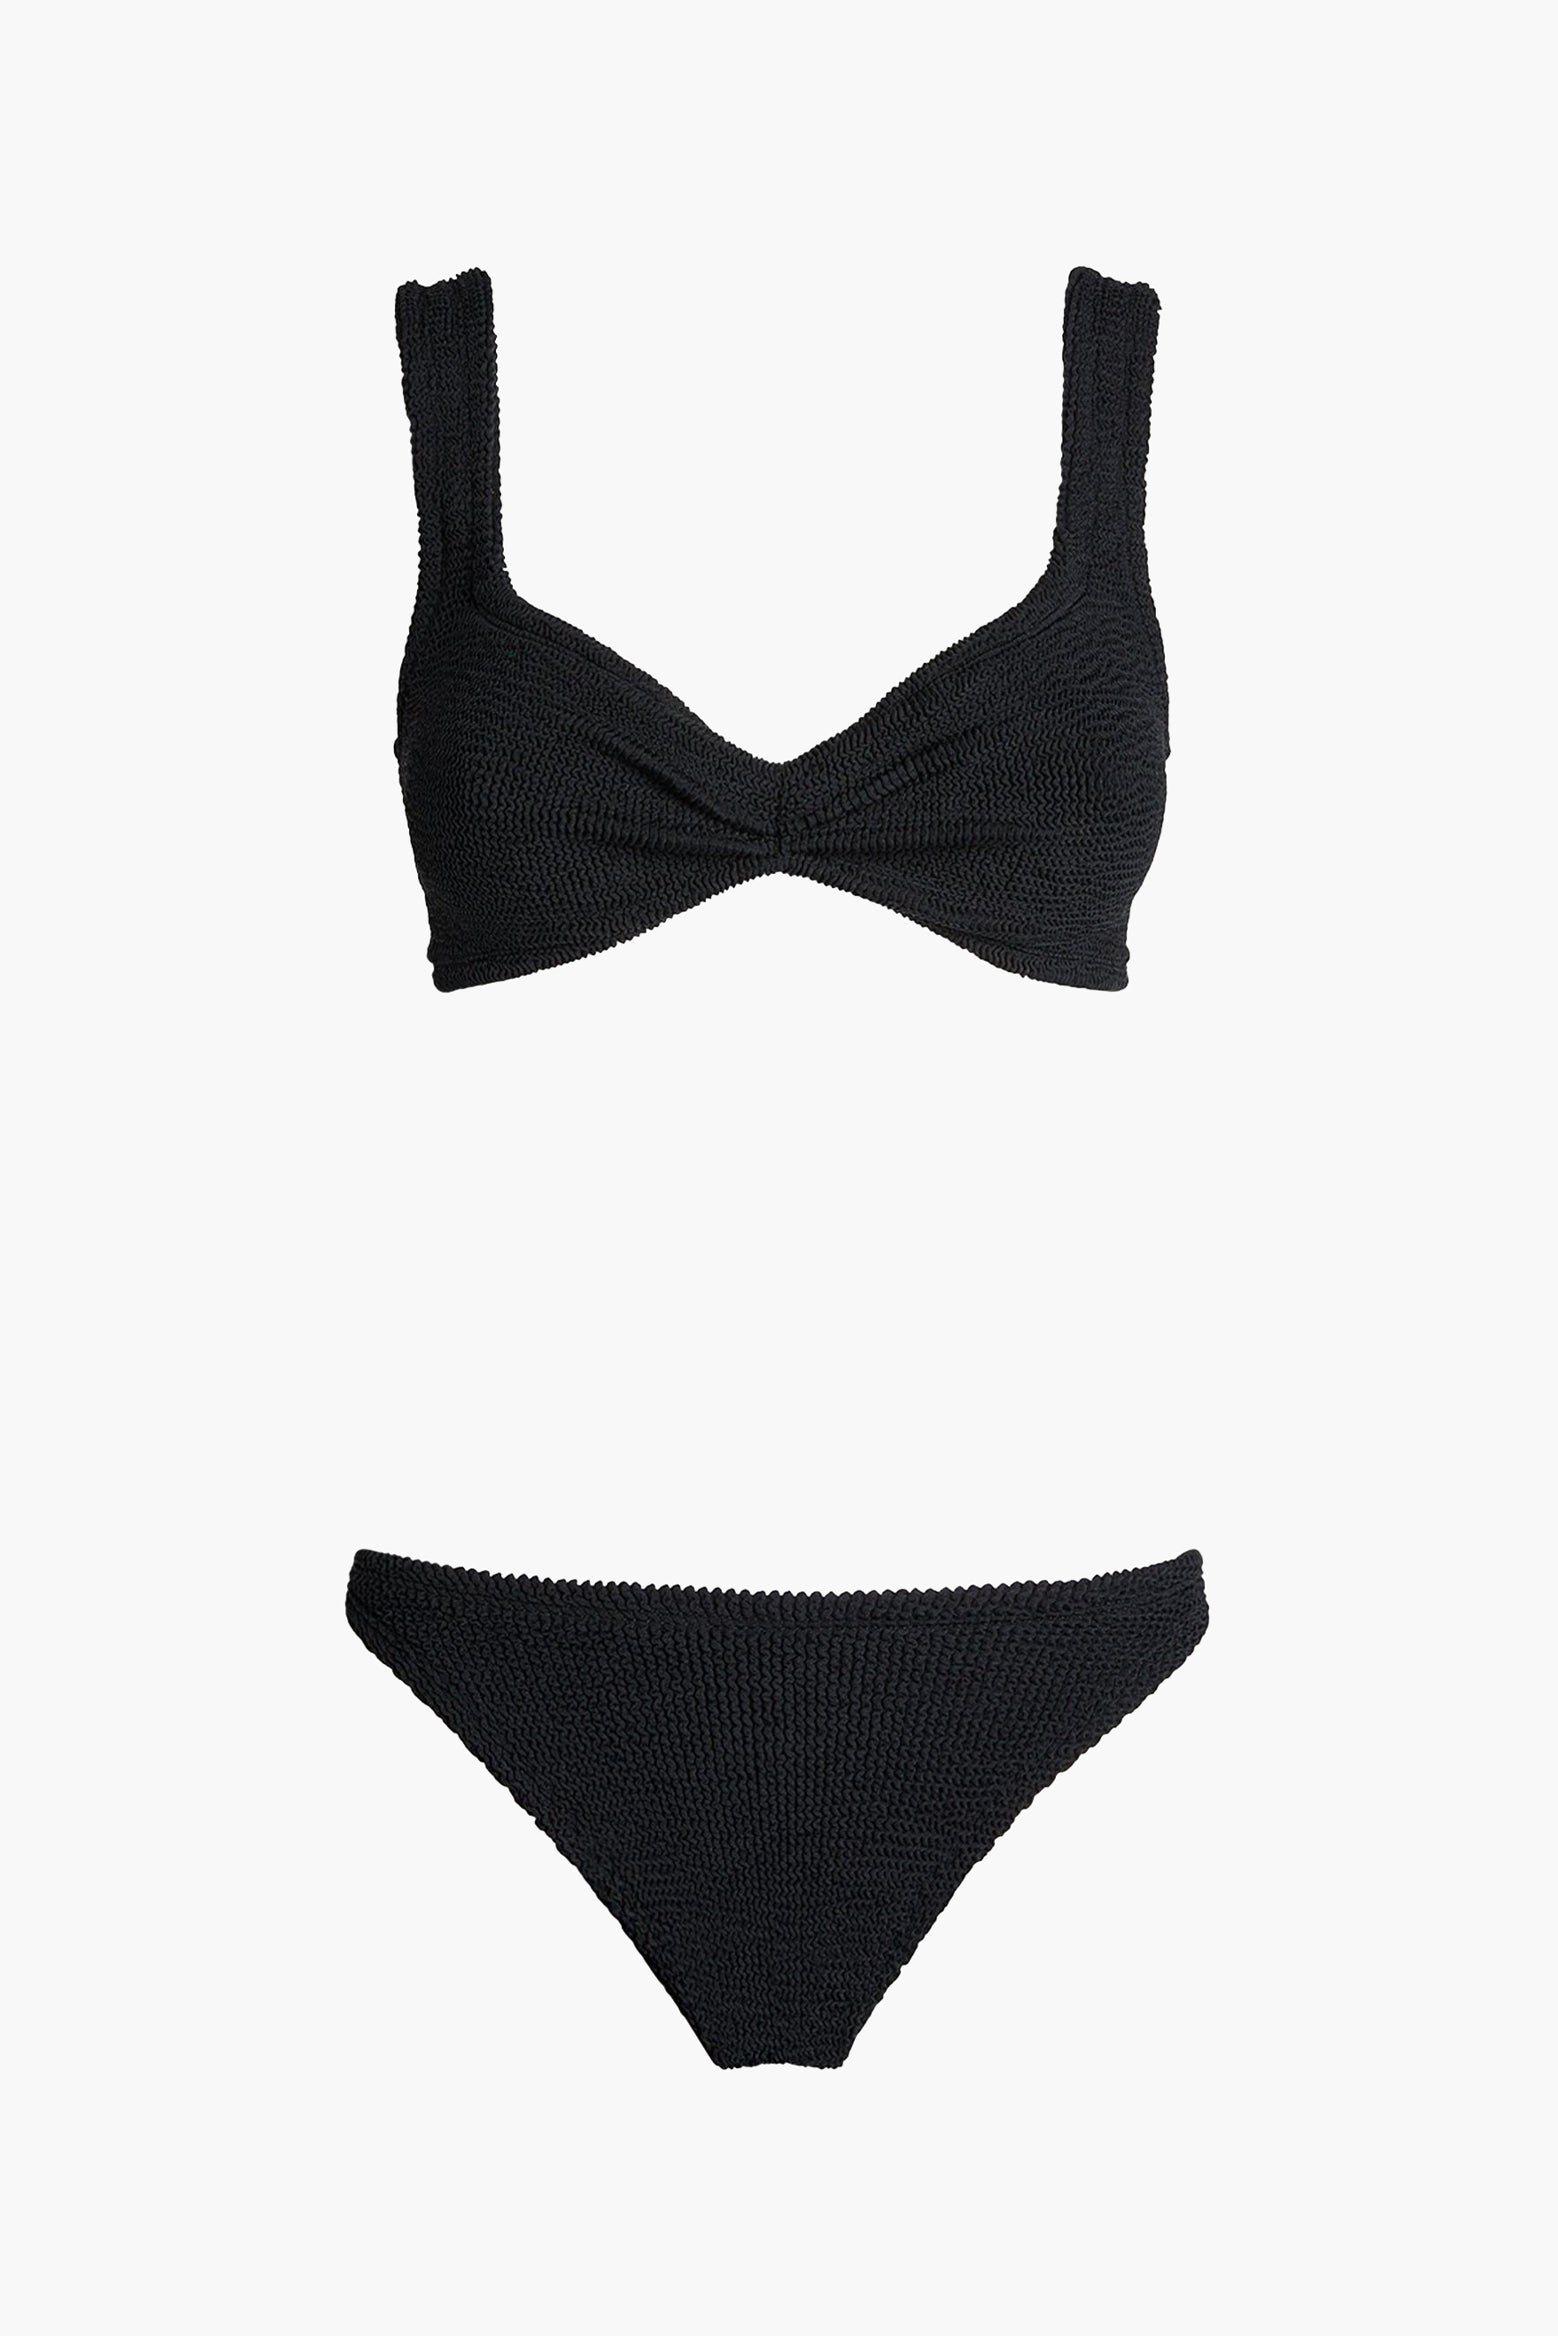 The Hunza G Juno Bikini in Black available at The New Trend Australia.